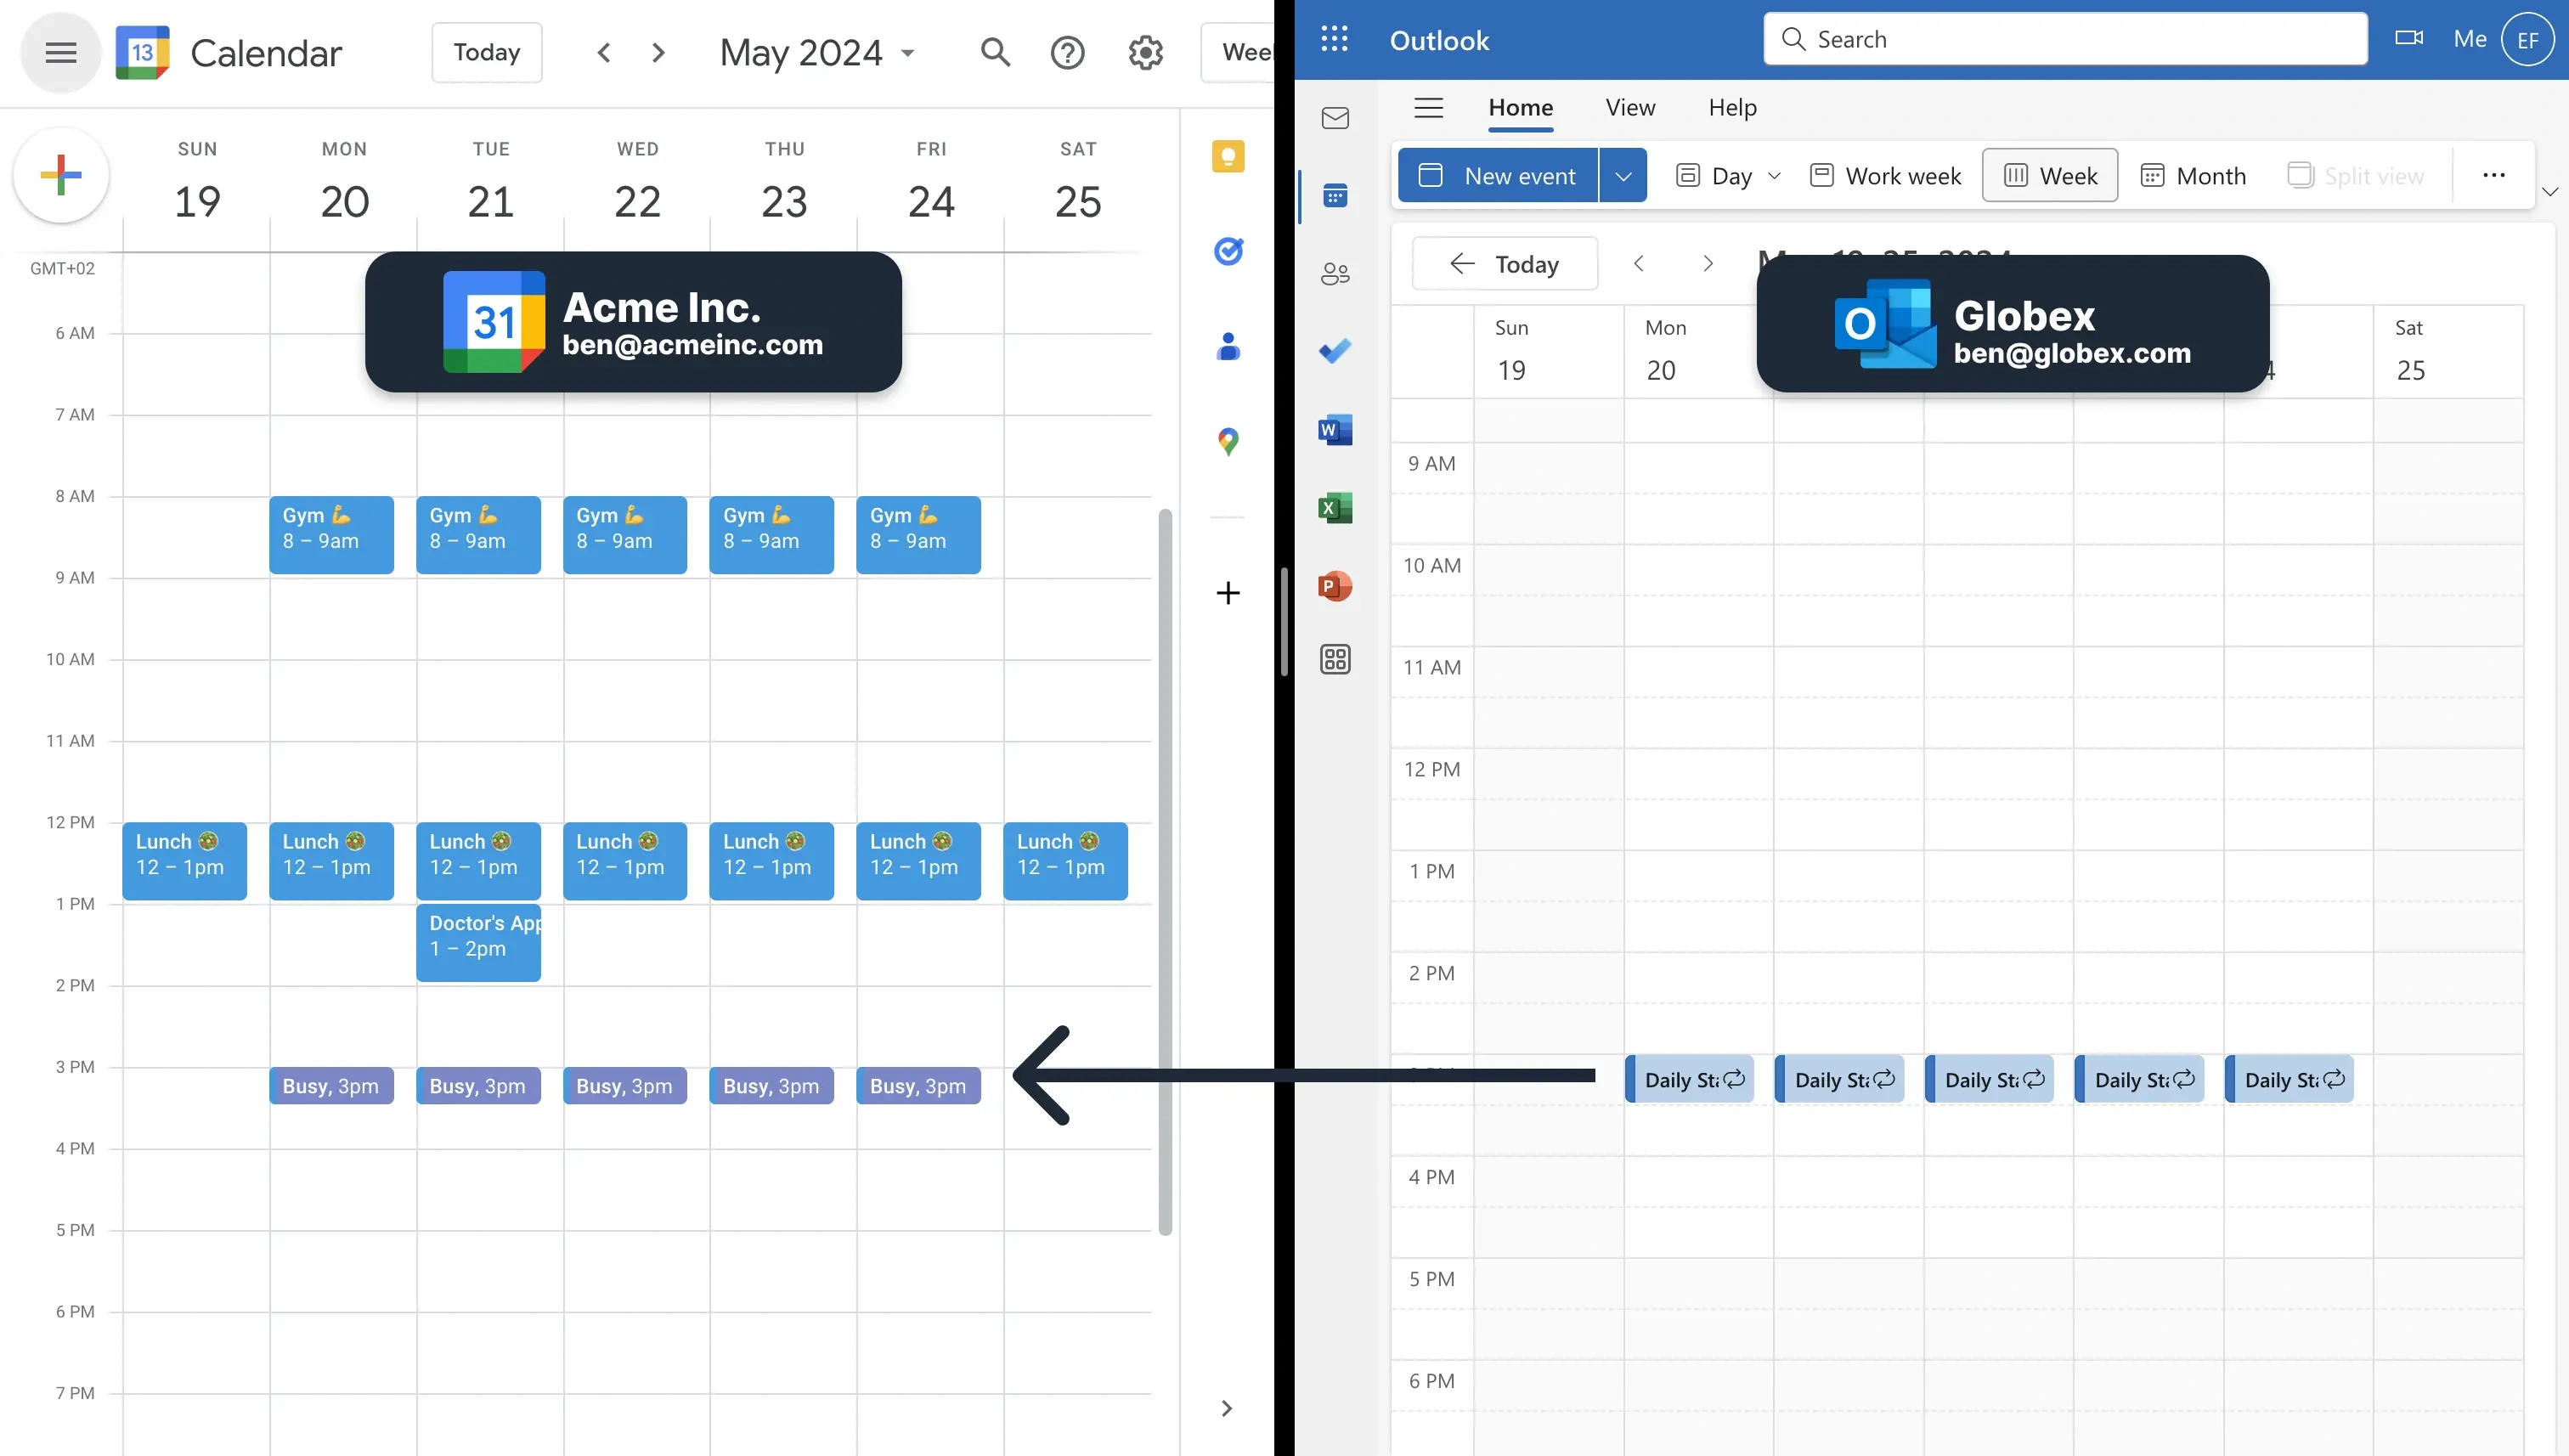 Outlook synced with Google Calendar